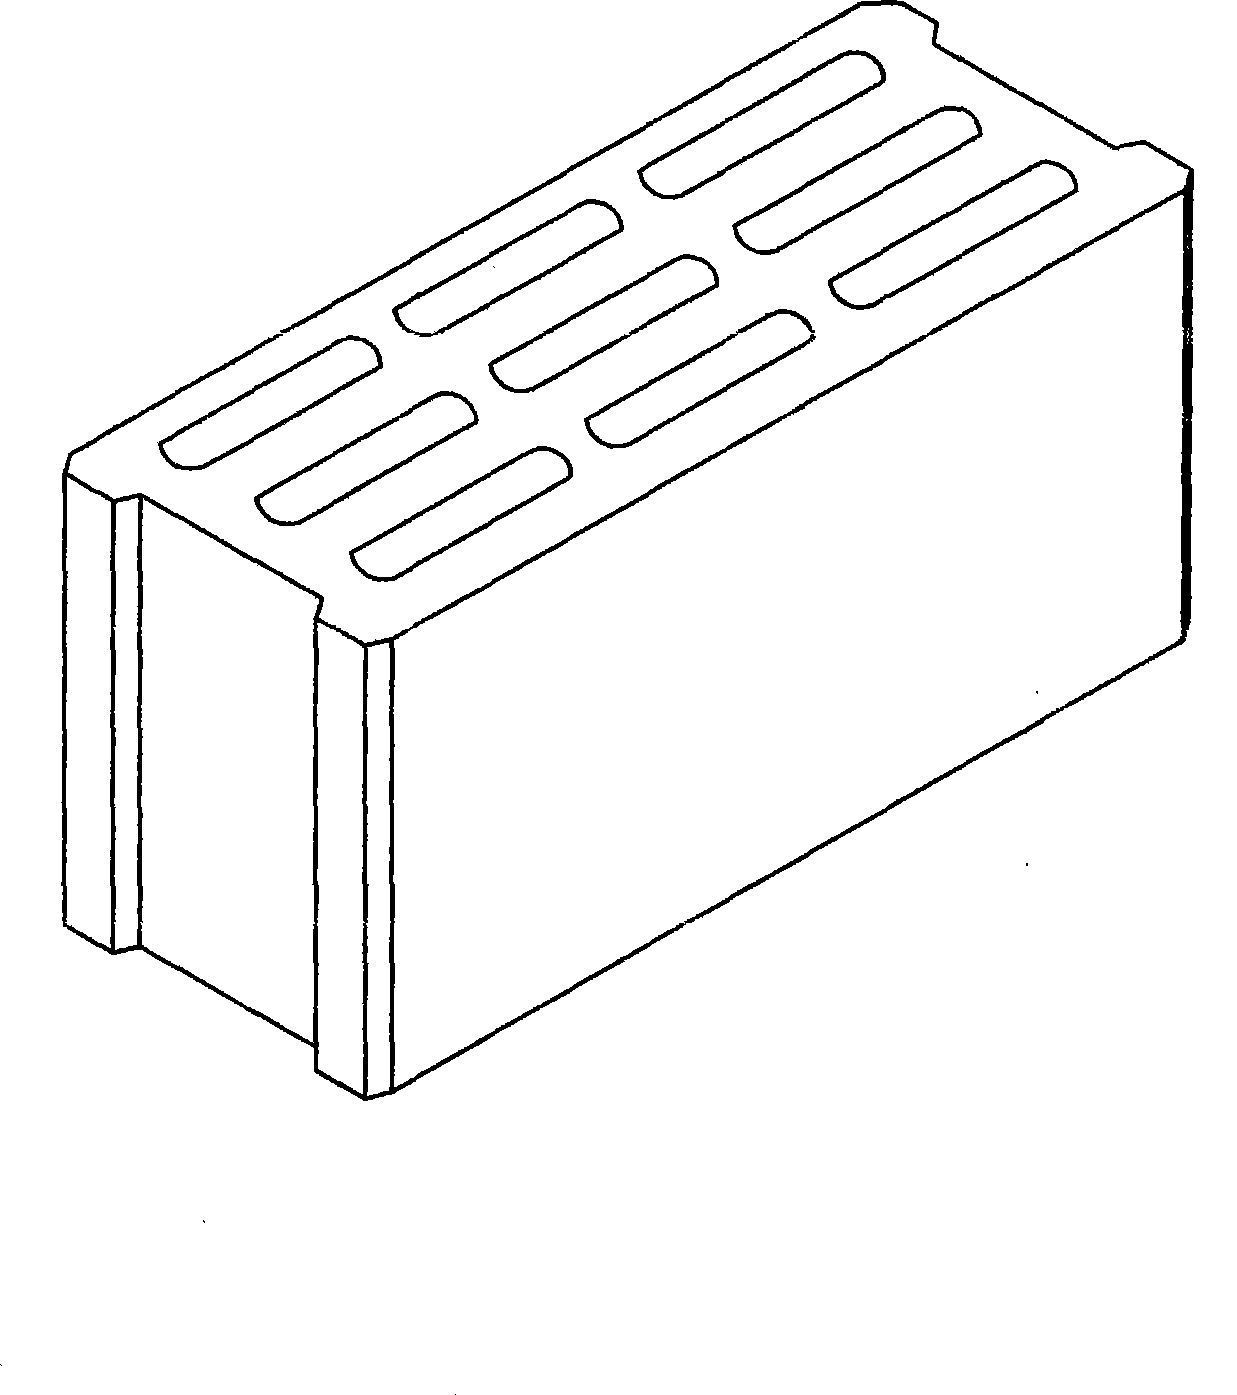 Self-heat preserving building block of exterior wall